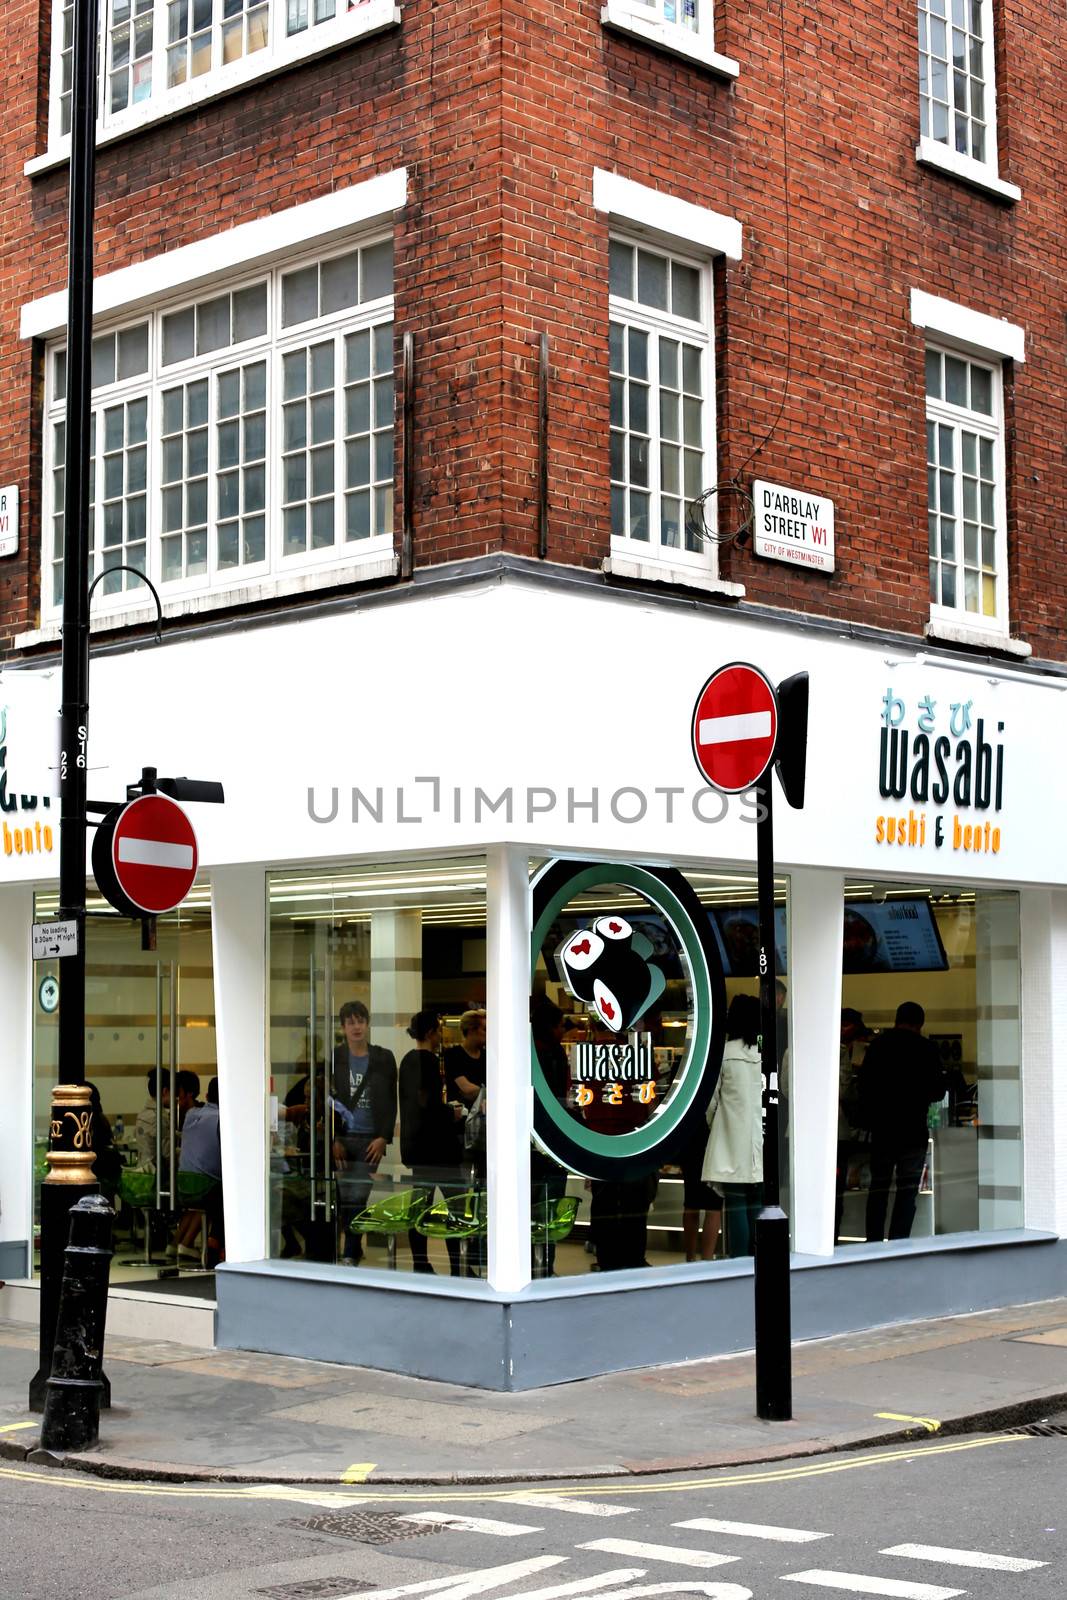 Wasabi Sushi Shop D'Arblay Street London by Whiteboxmedia